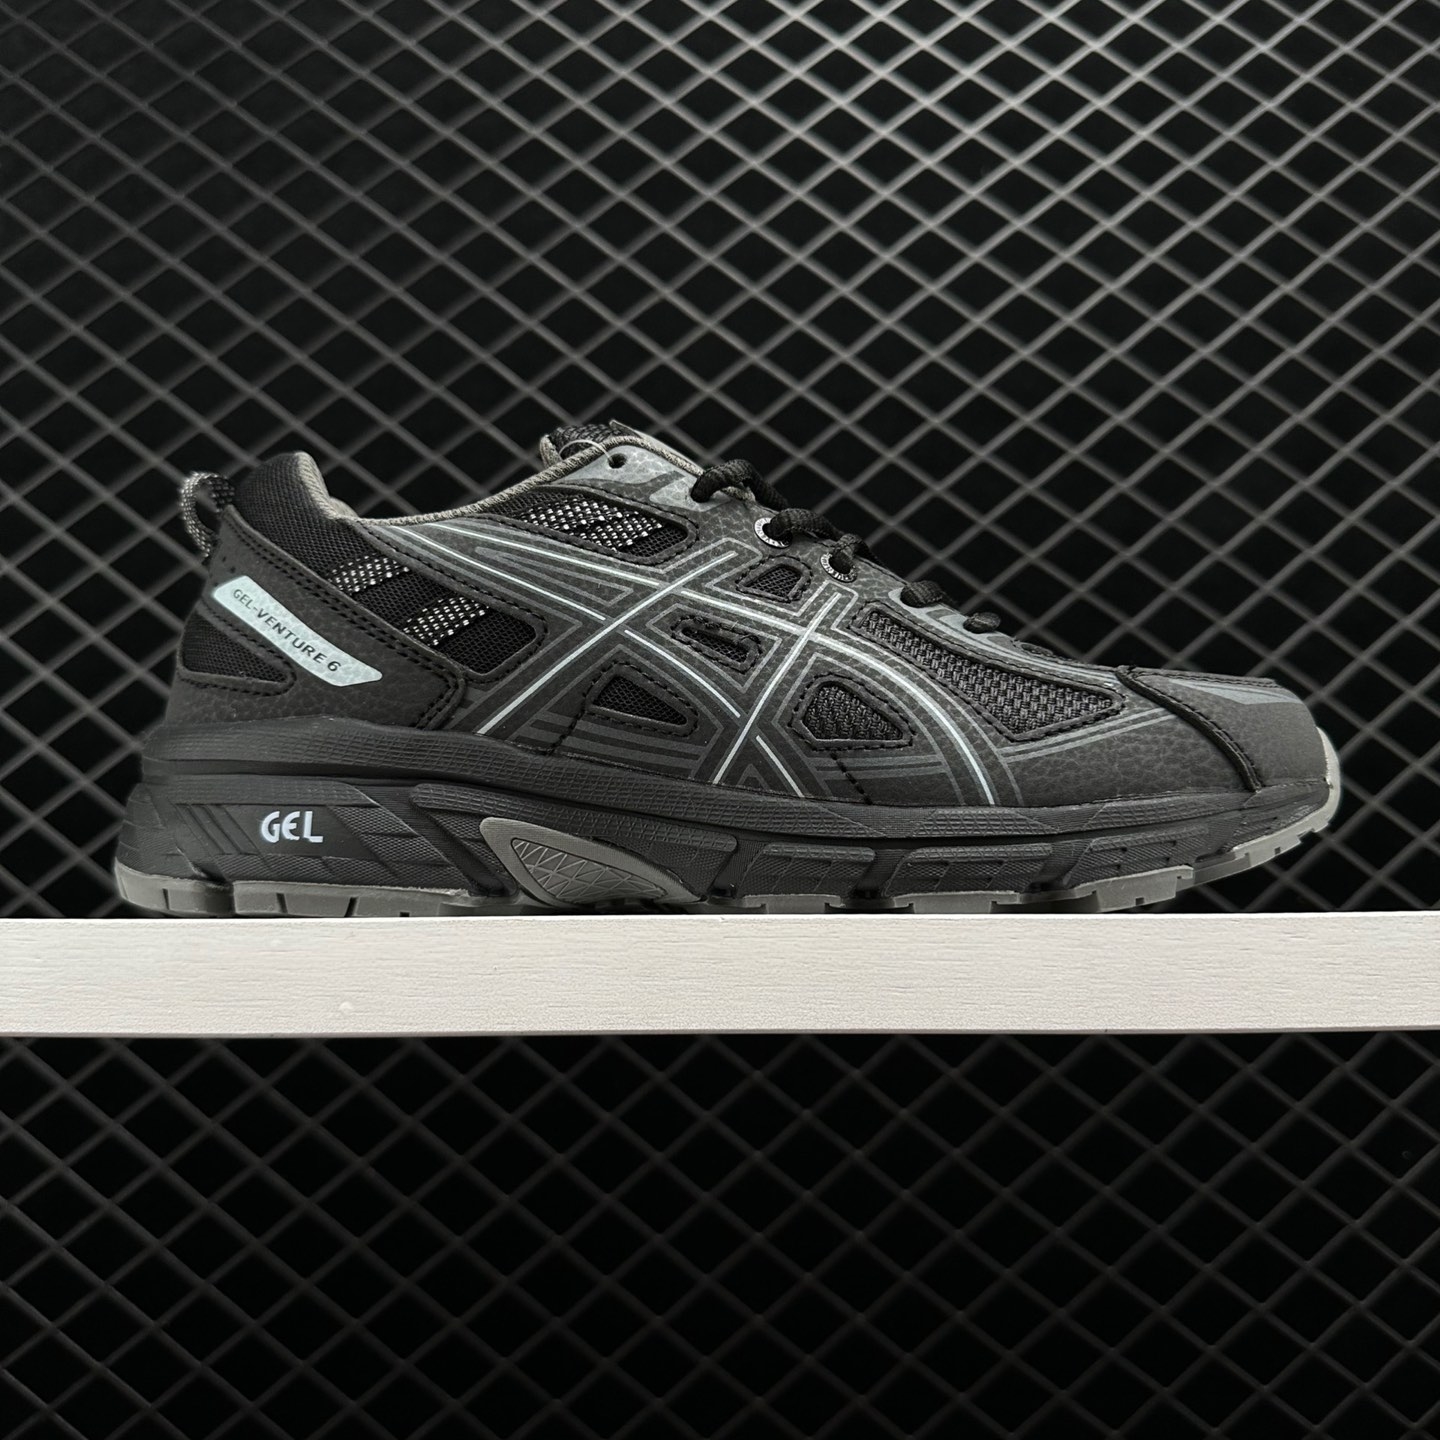 Asics Gel Venture 6 4E Wide Black Phantom T7G3N-9016 - Best Selection of Wide Fit Running Shoes